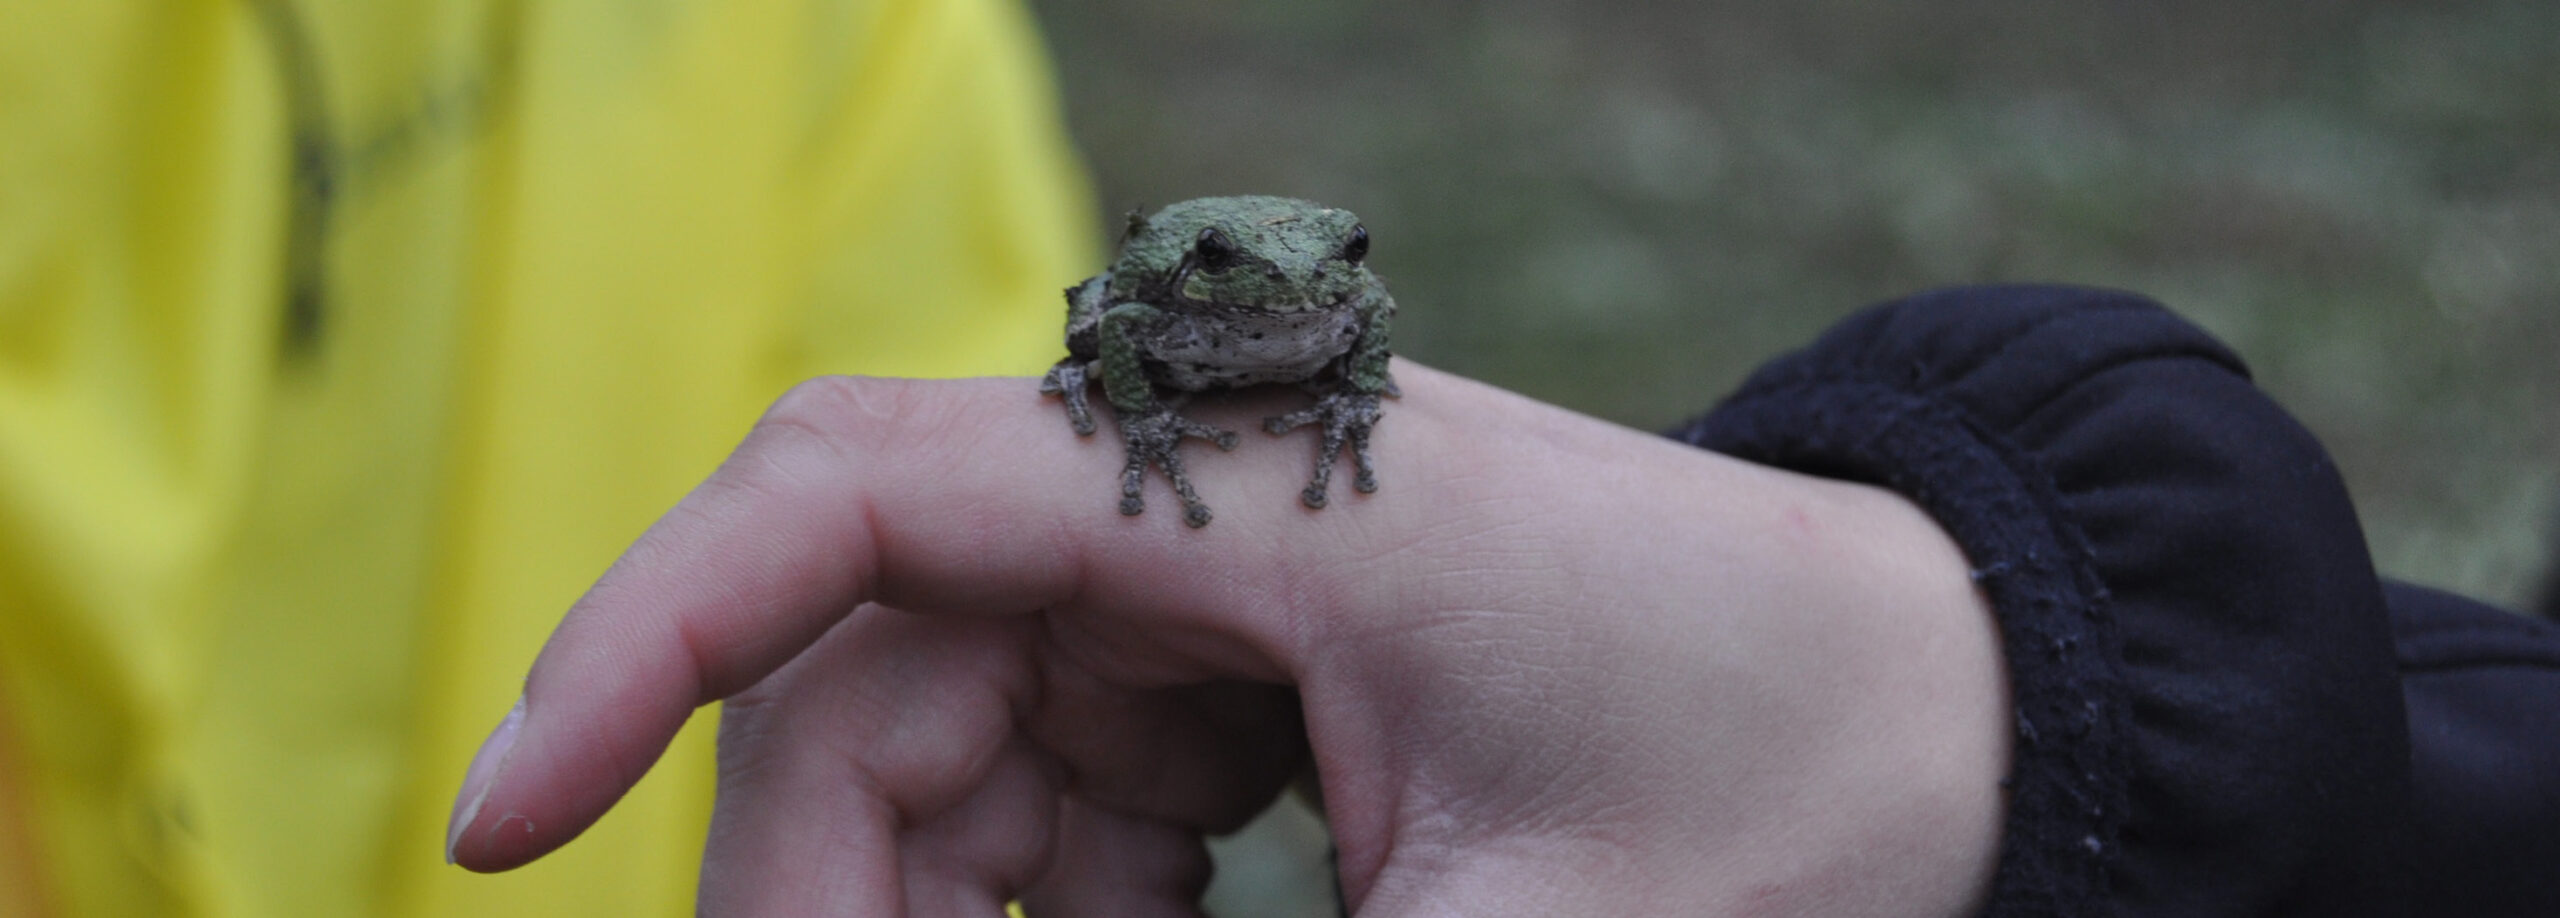 Frog on hand